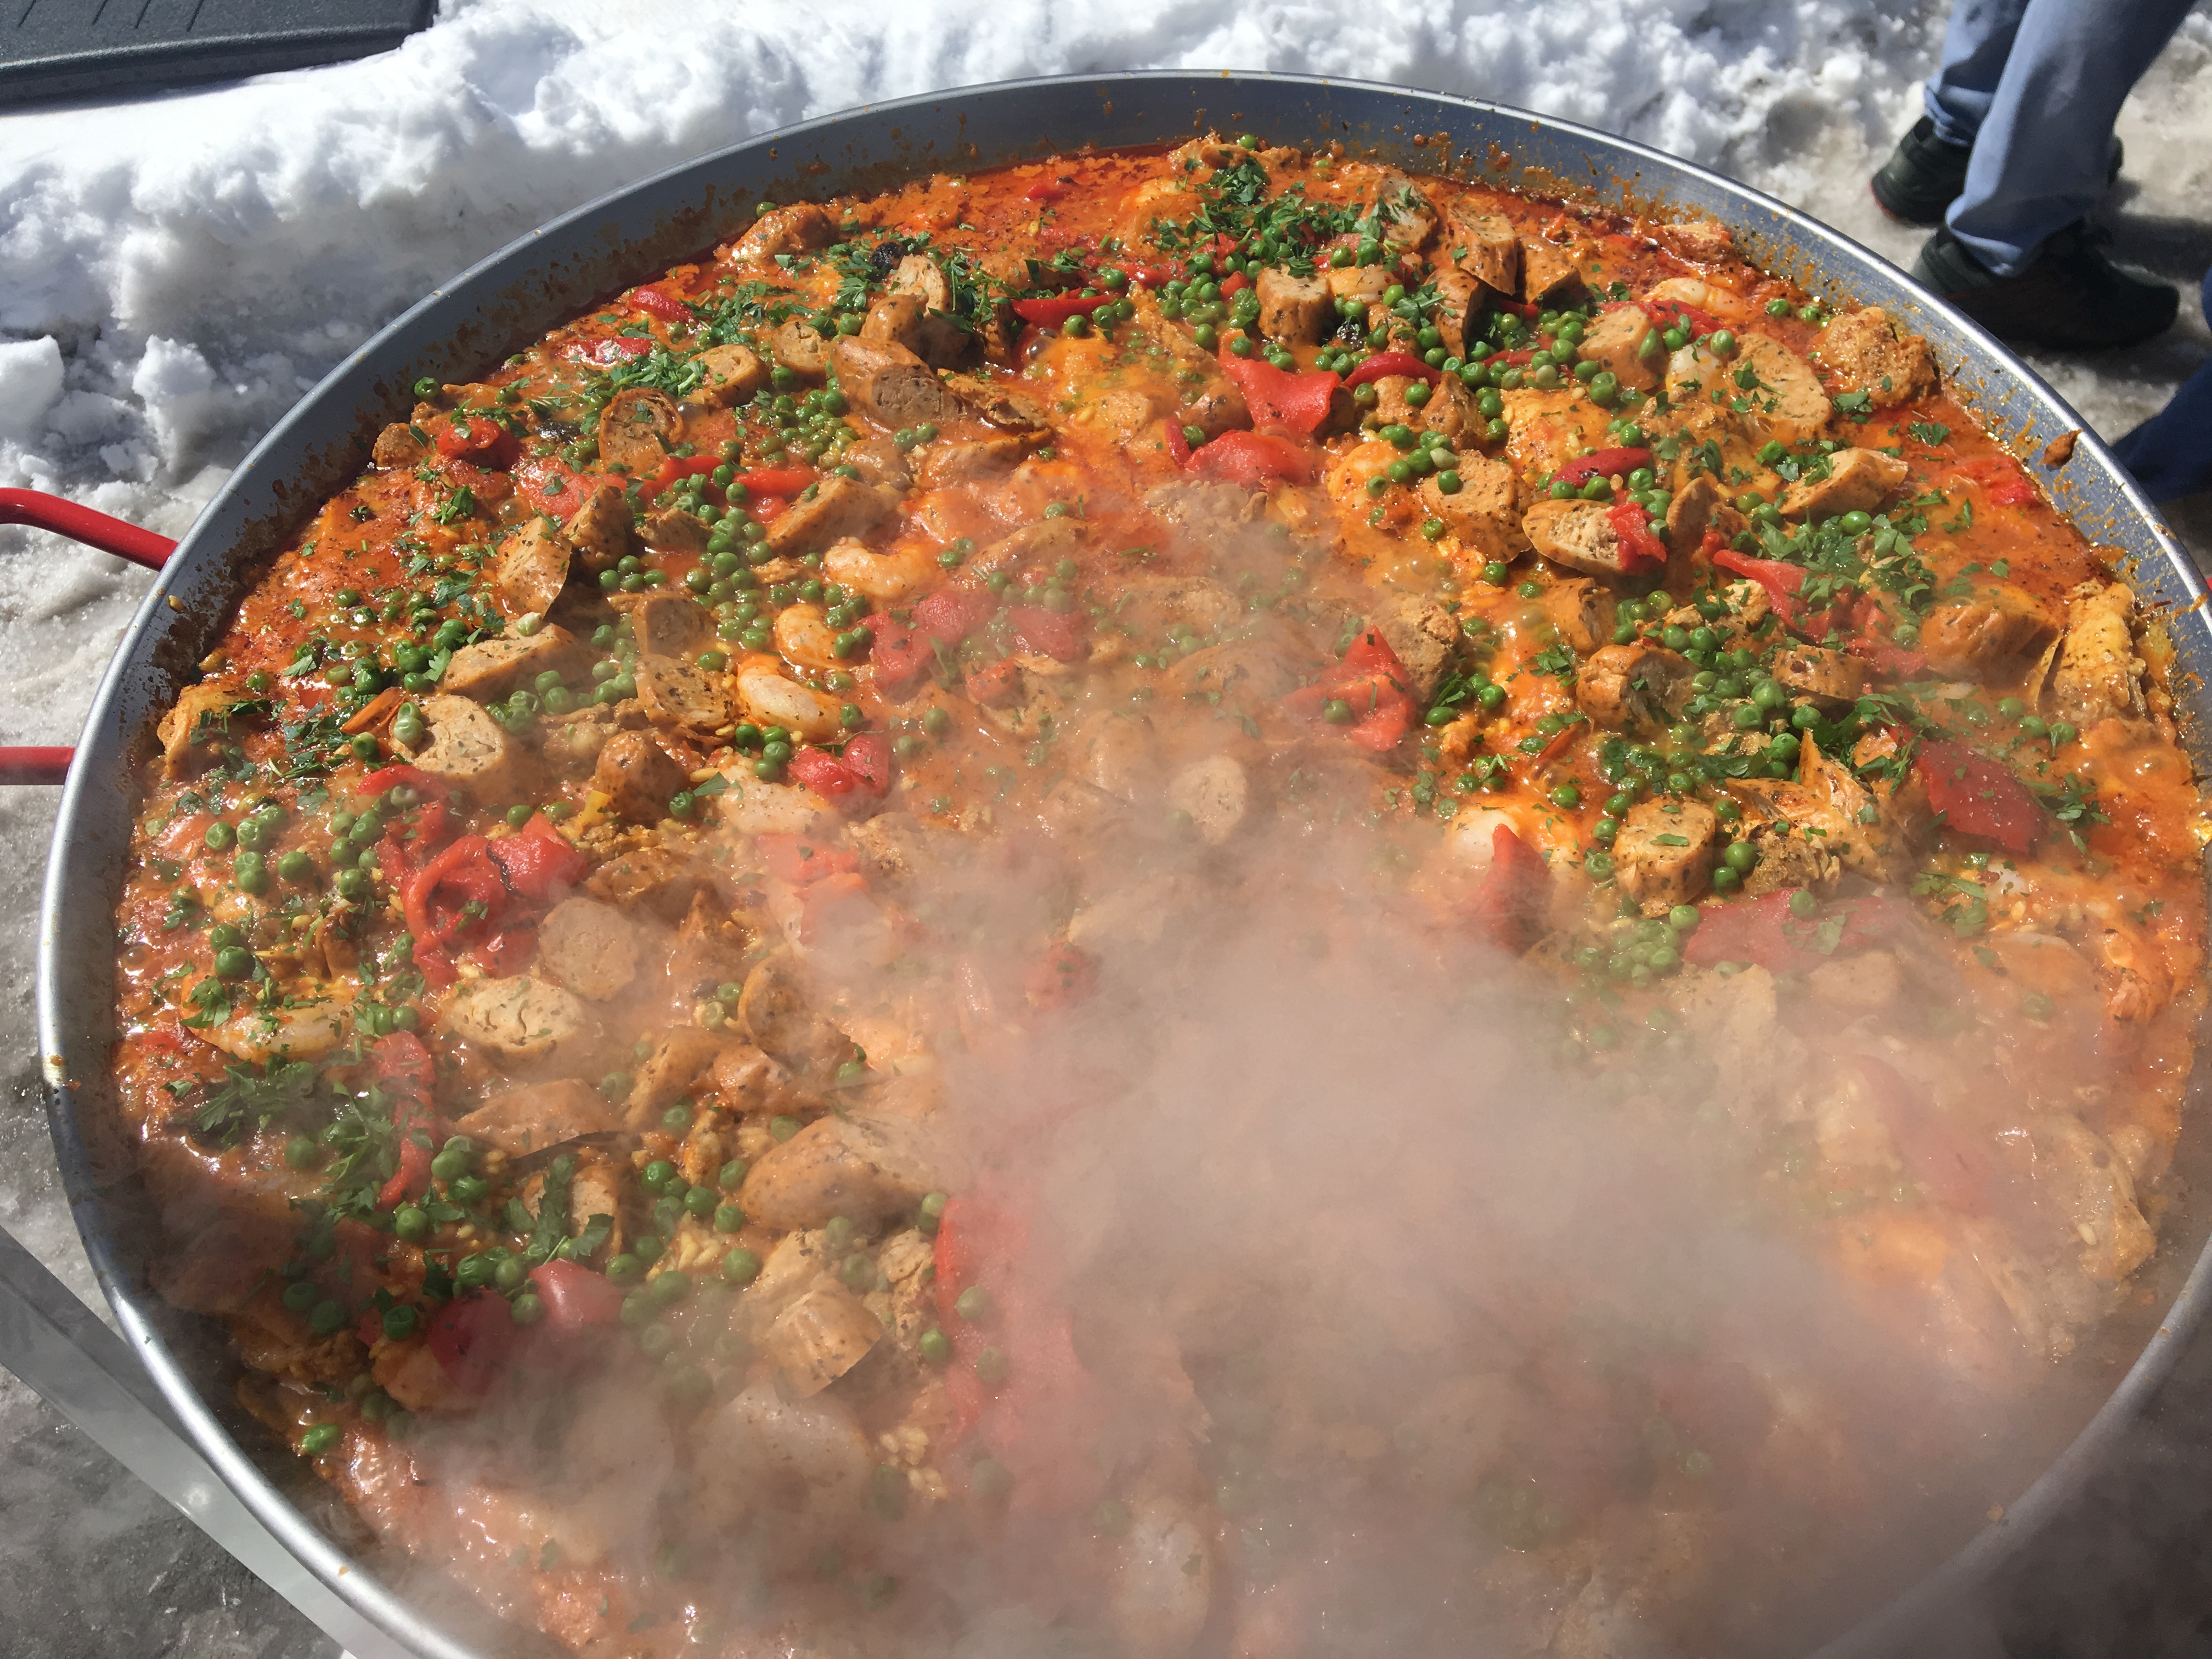 Pot of chili boiling